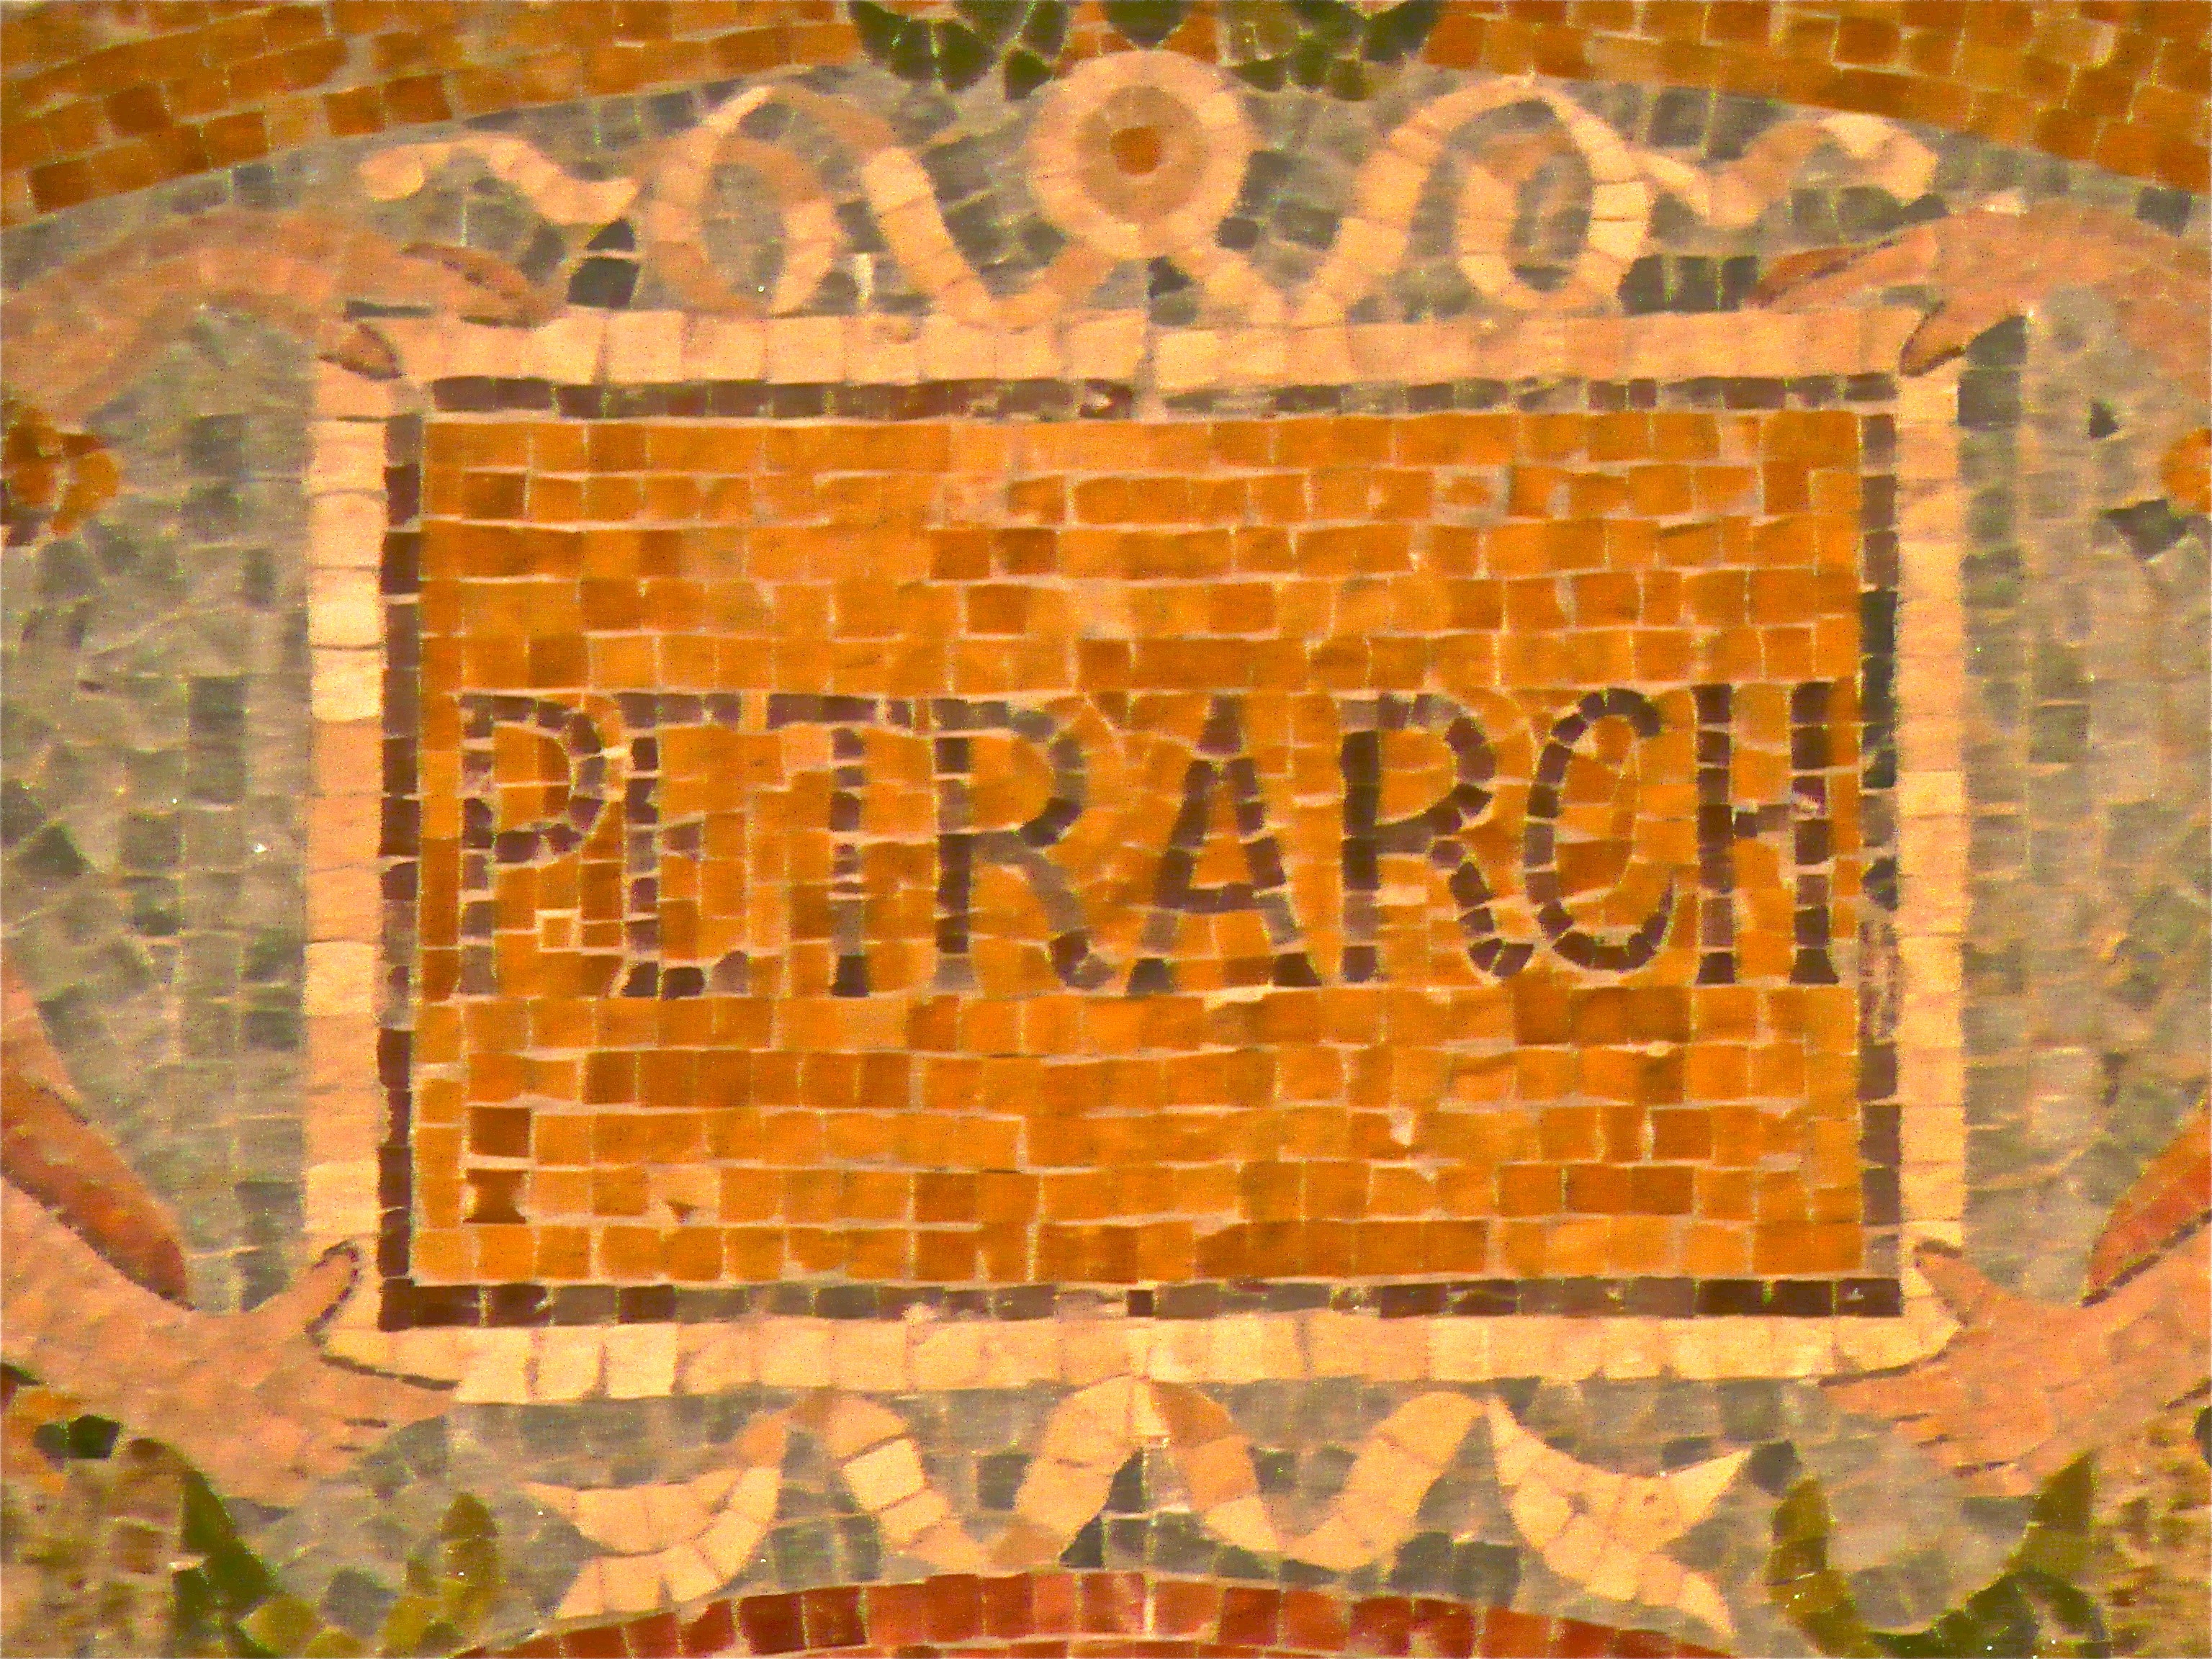 Petrarch